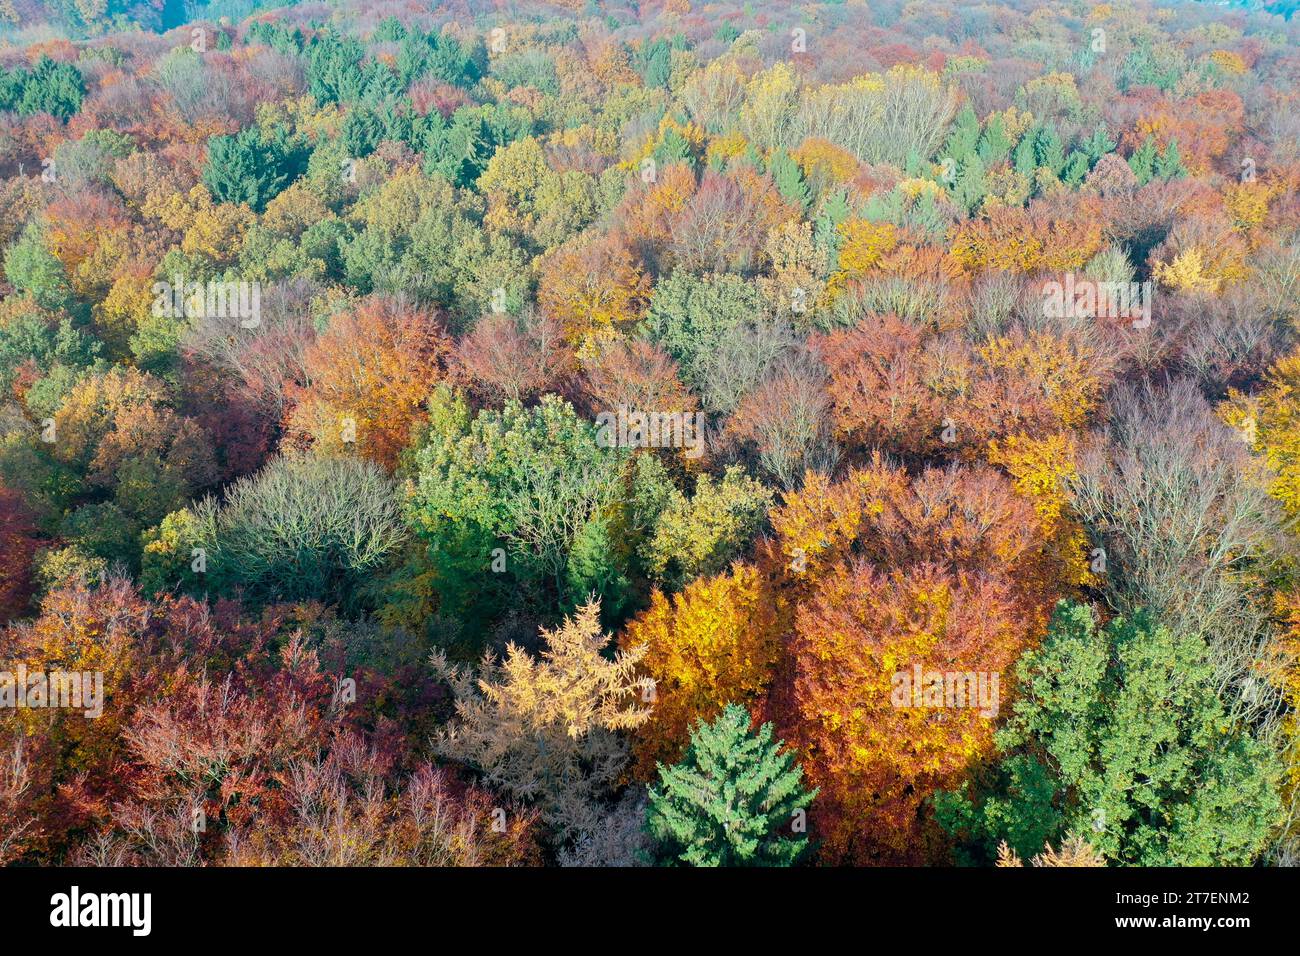 Wald von oben, Herbstwald, Herbstlaub, Herbstfärbung, Herbstverfärbung, Herbstfarben, bunt, buntes Laub, herbstlich, herbstlicher Wald, Luftaufnahme, Foto Stock